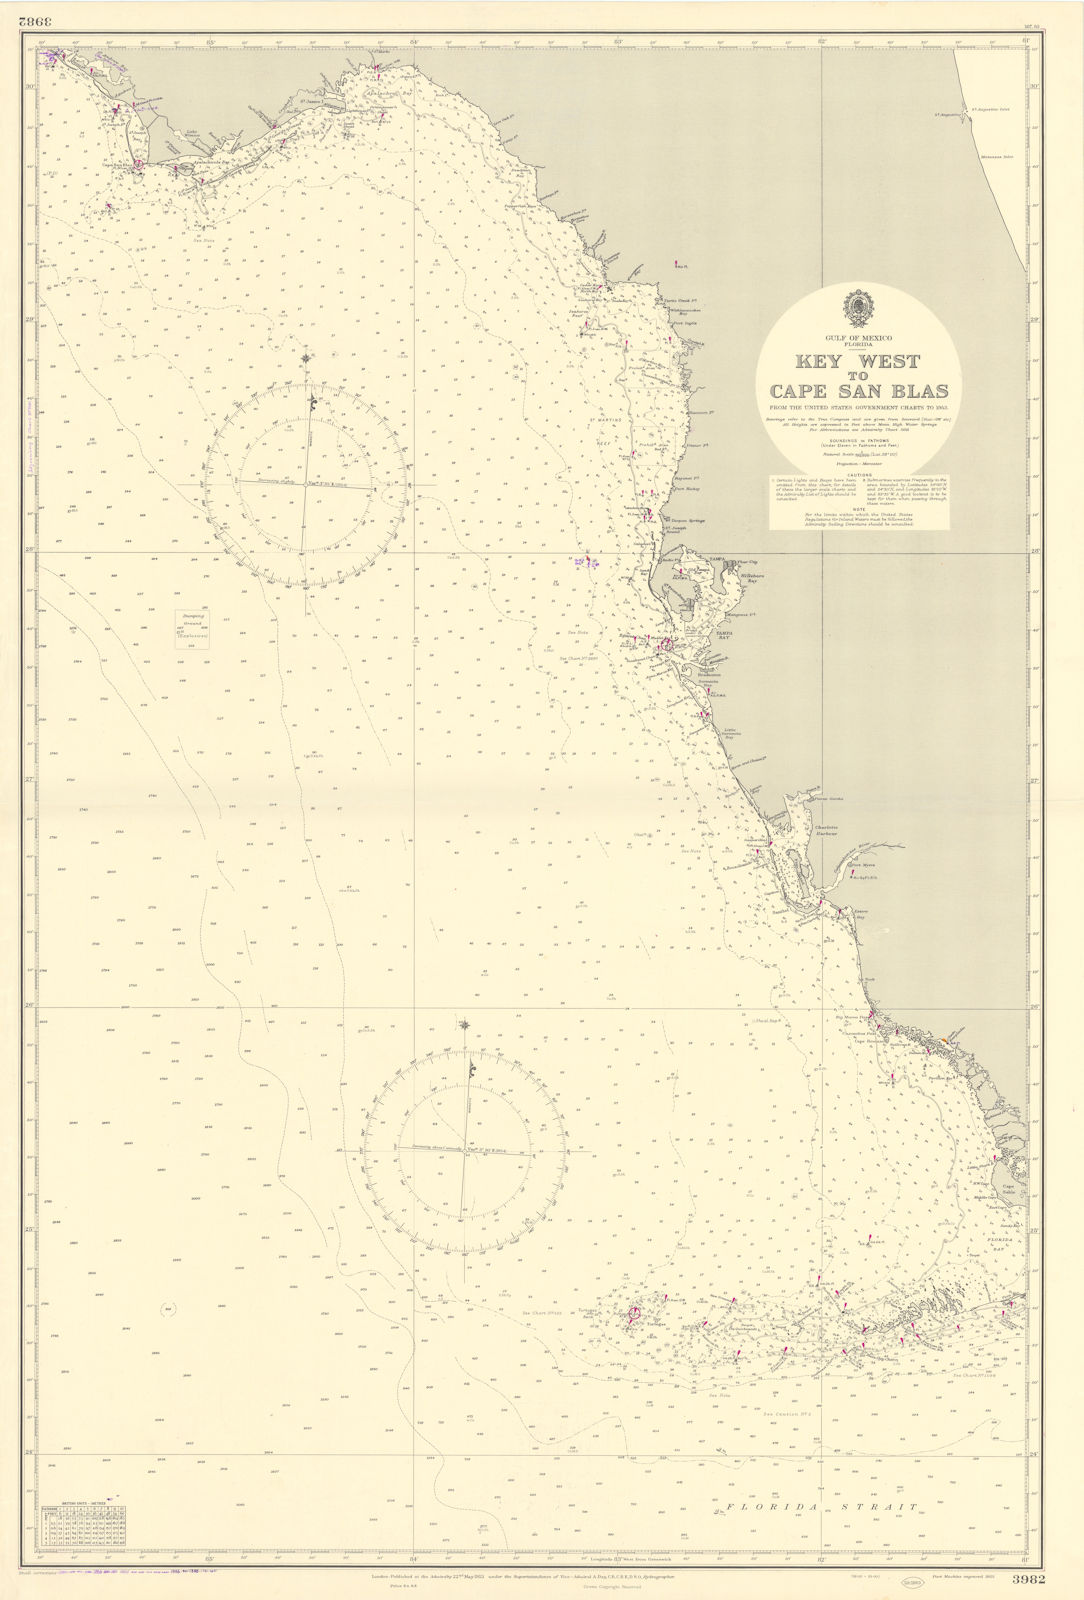 Gulf Mexico Florida Key West-Cape San Blas ADMIRALTY sea chart 1953 (1956) map